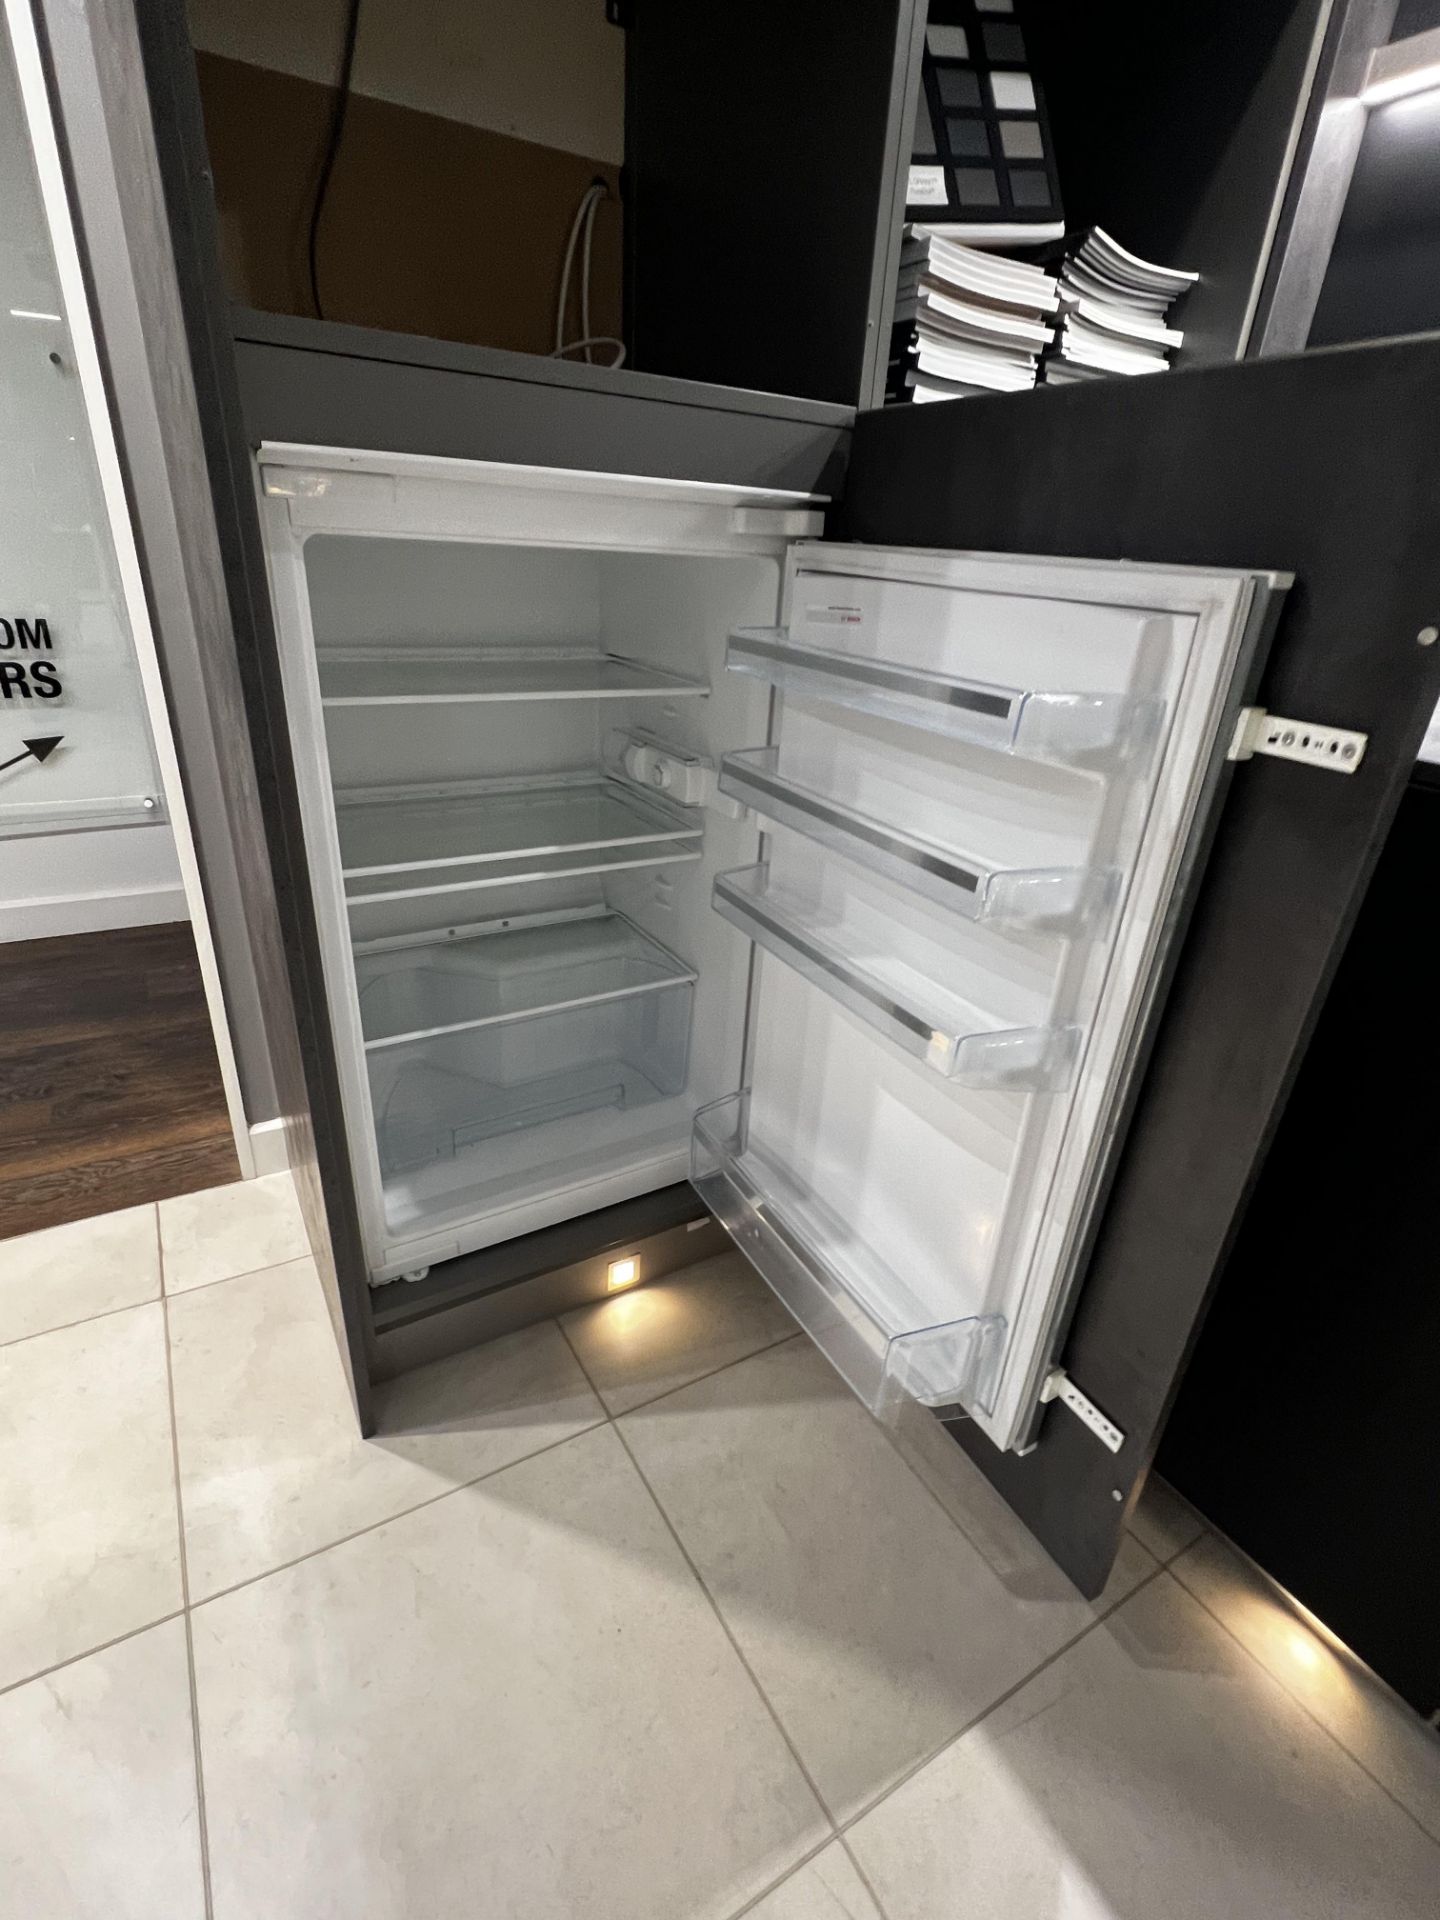 Bosch fridge (built in)